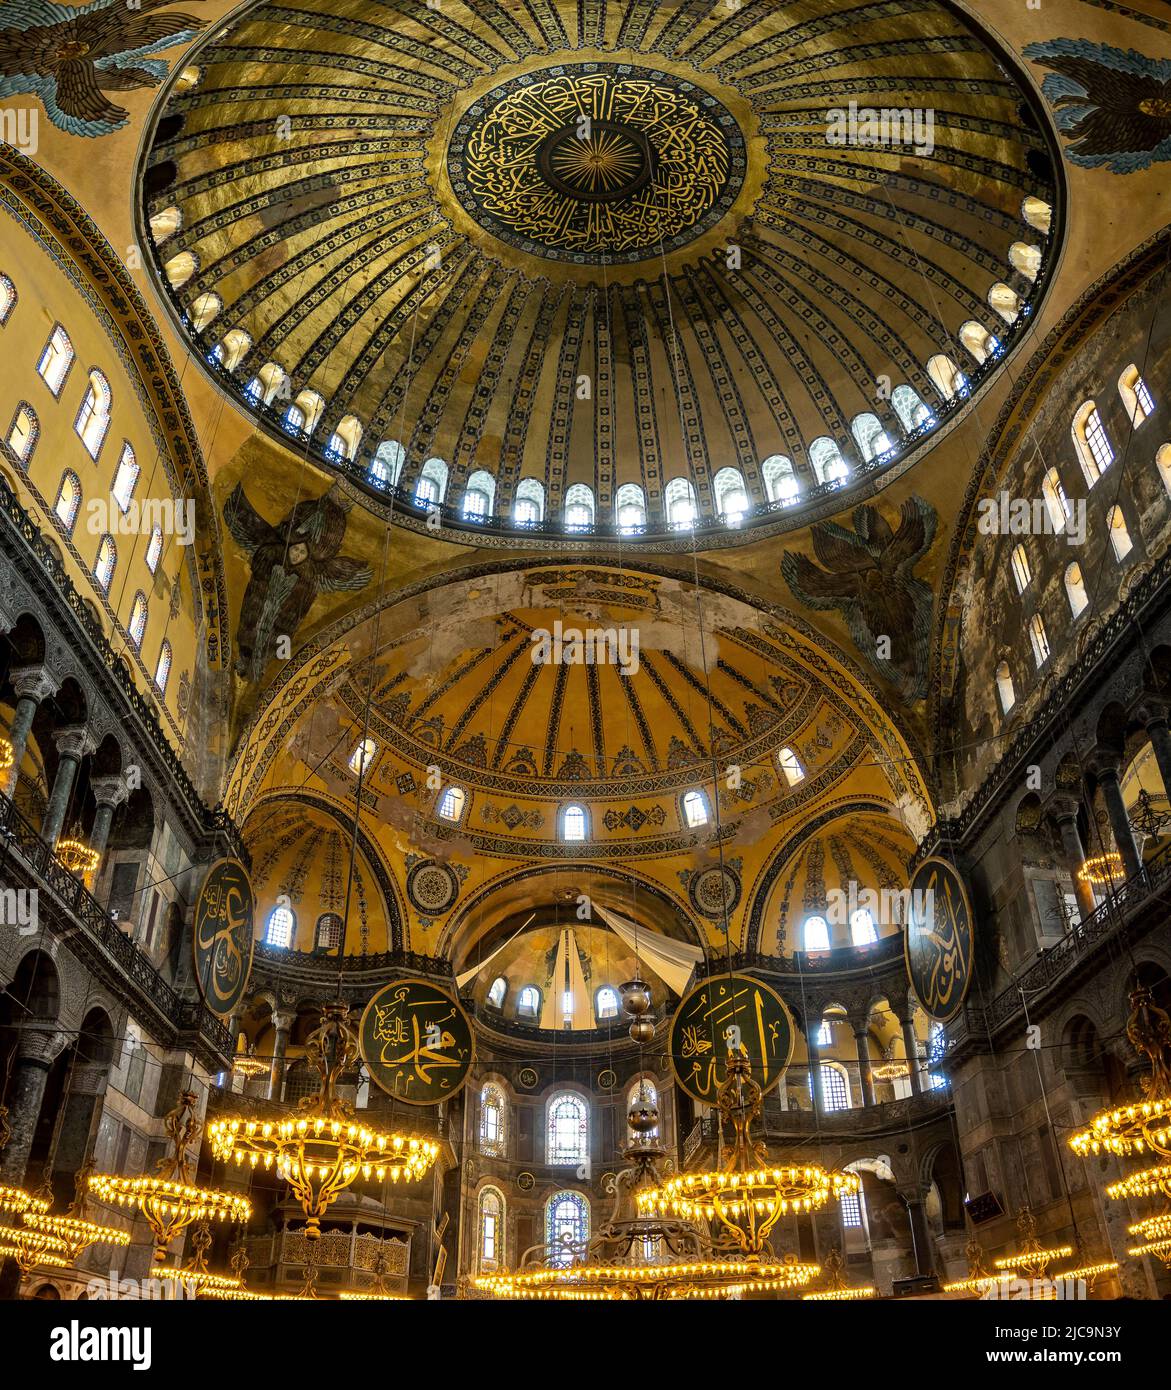 Exquisitely decorated dome of the Hagia Sophia, Istanbul, Türkiye. Stock Photo